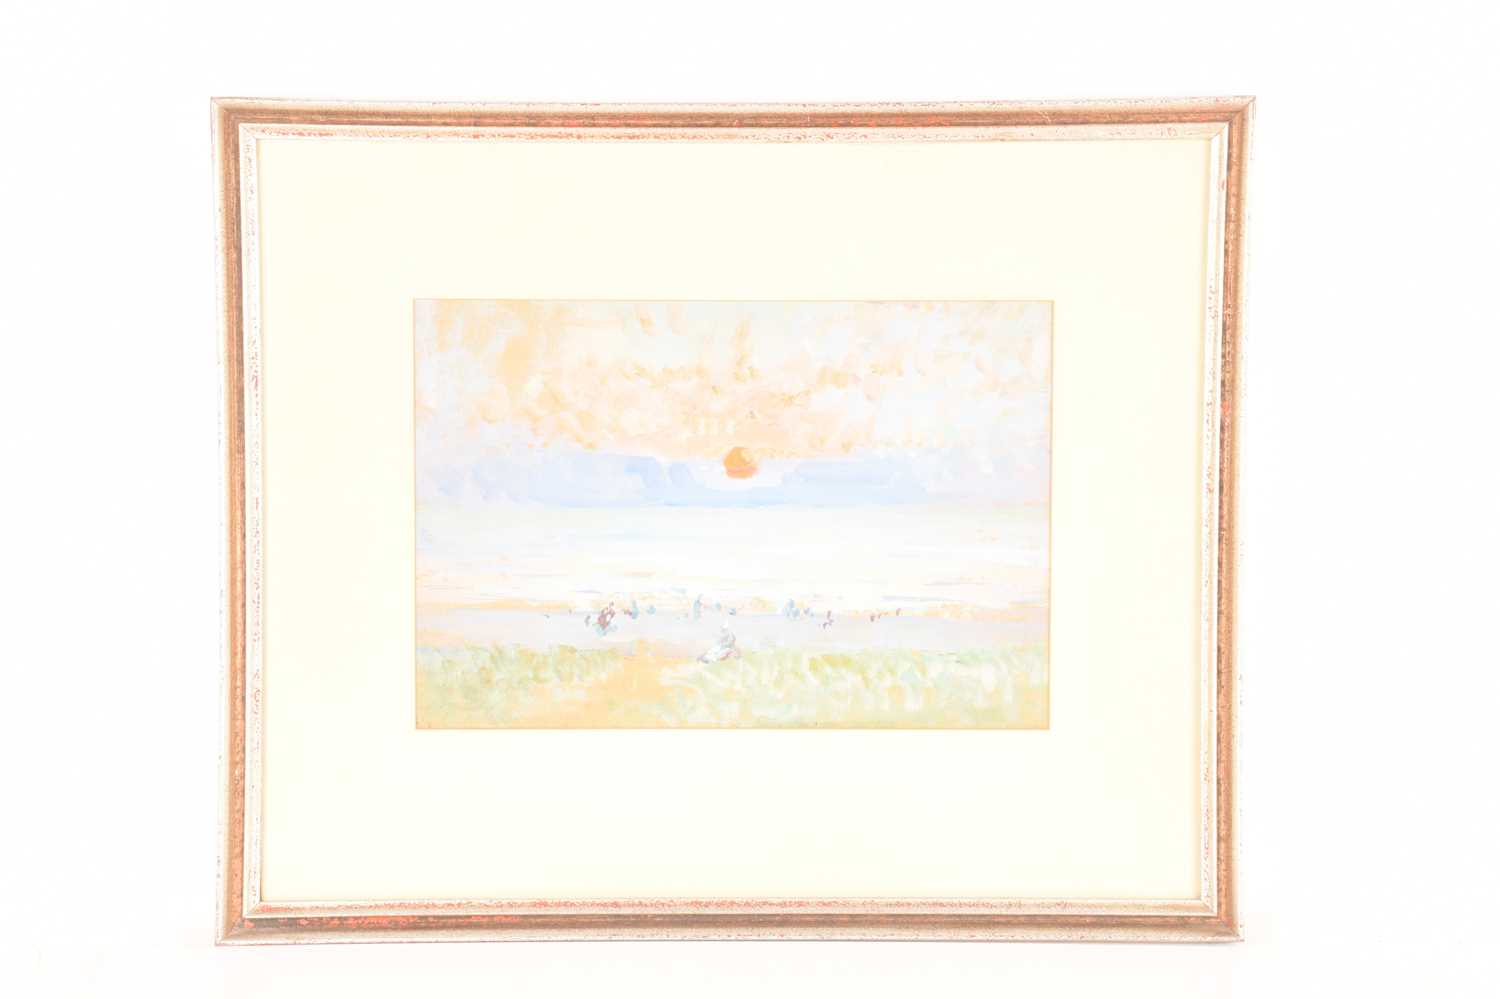 German Grobe (1857-1938) German, Sunset at the beach, gouache, image 21 cm x 31 cm, framed 41 cm x 4